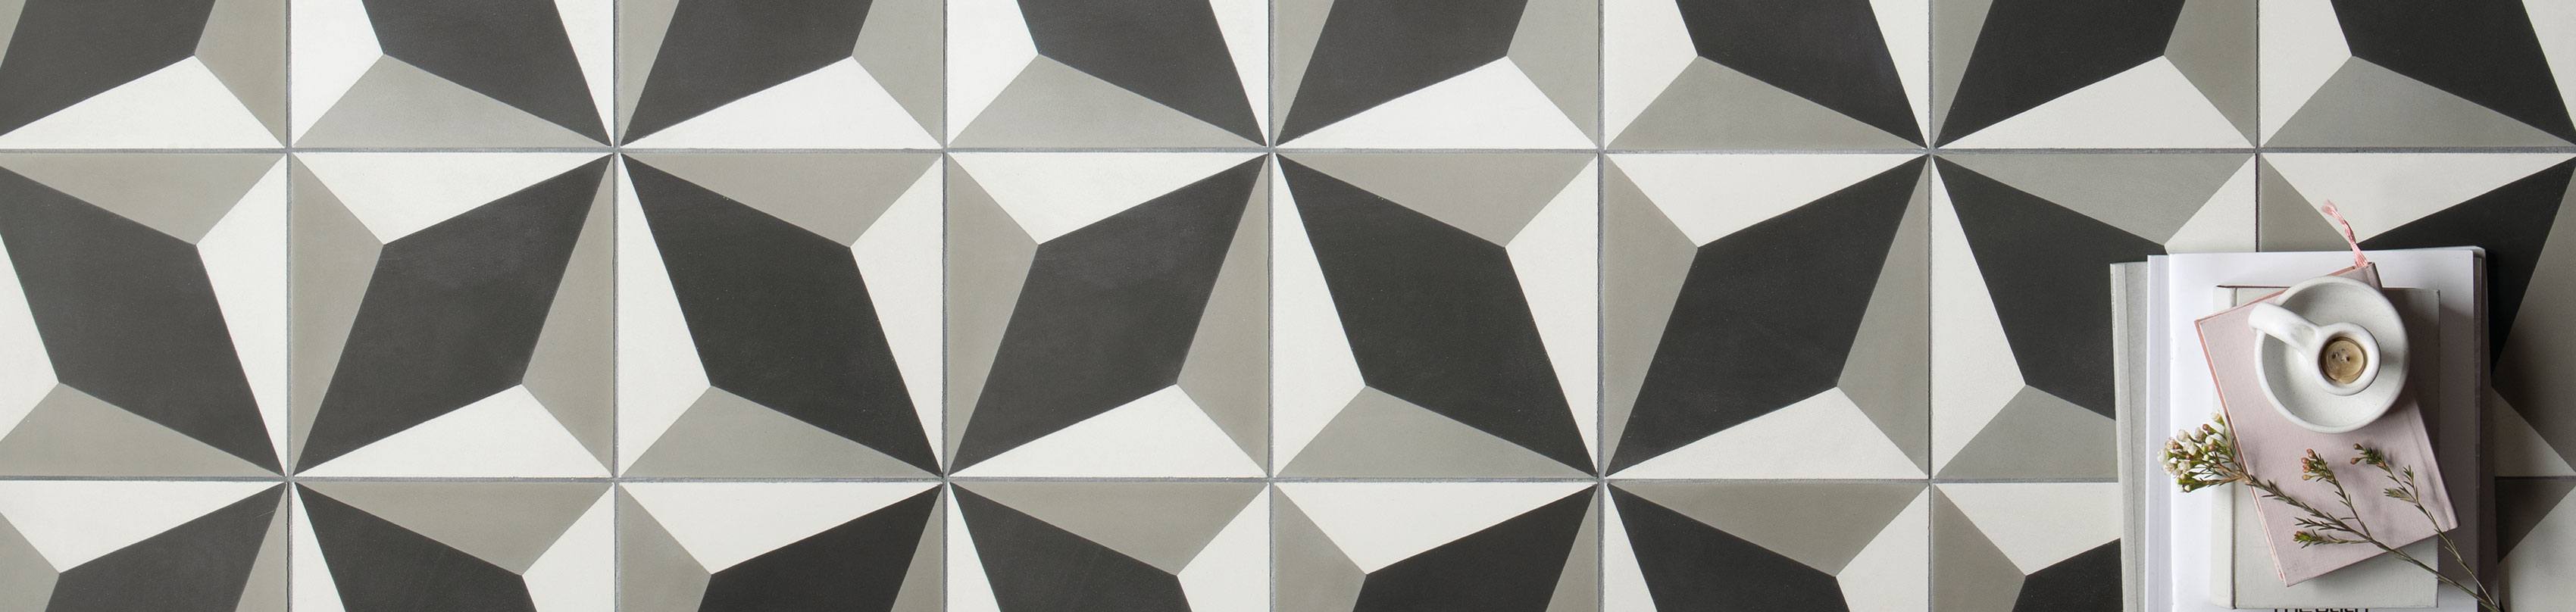 Monochrome Tiles